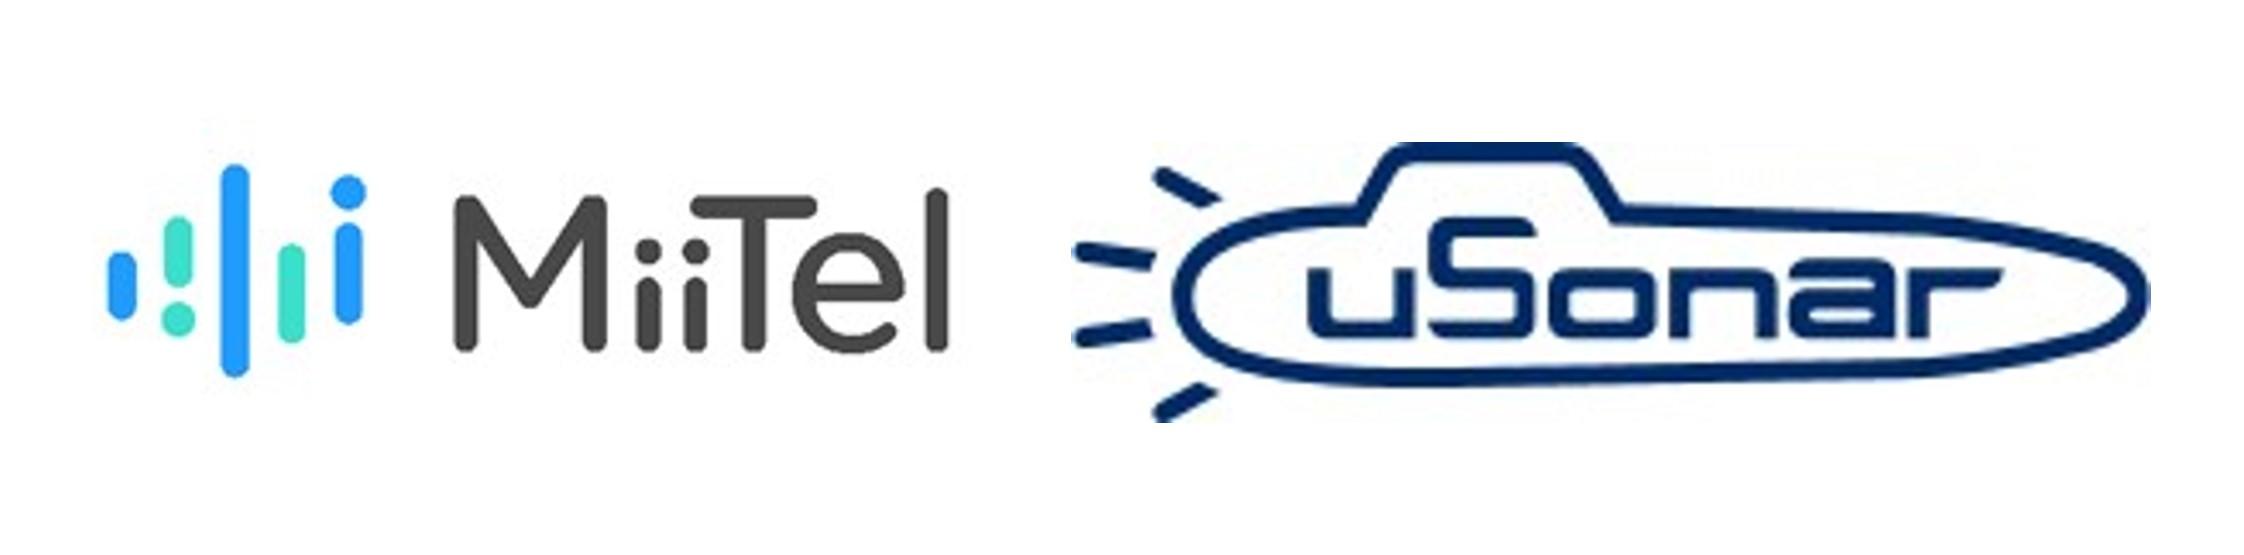 MiiTell_uSonar_logo2.jpg